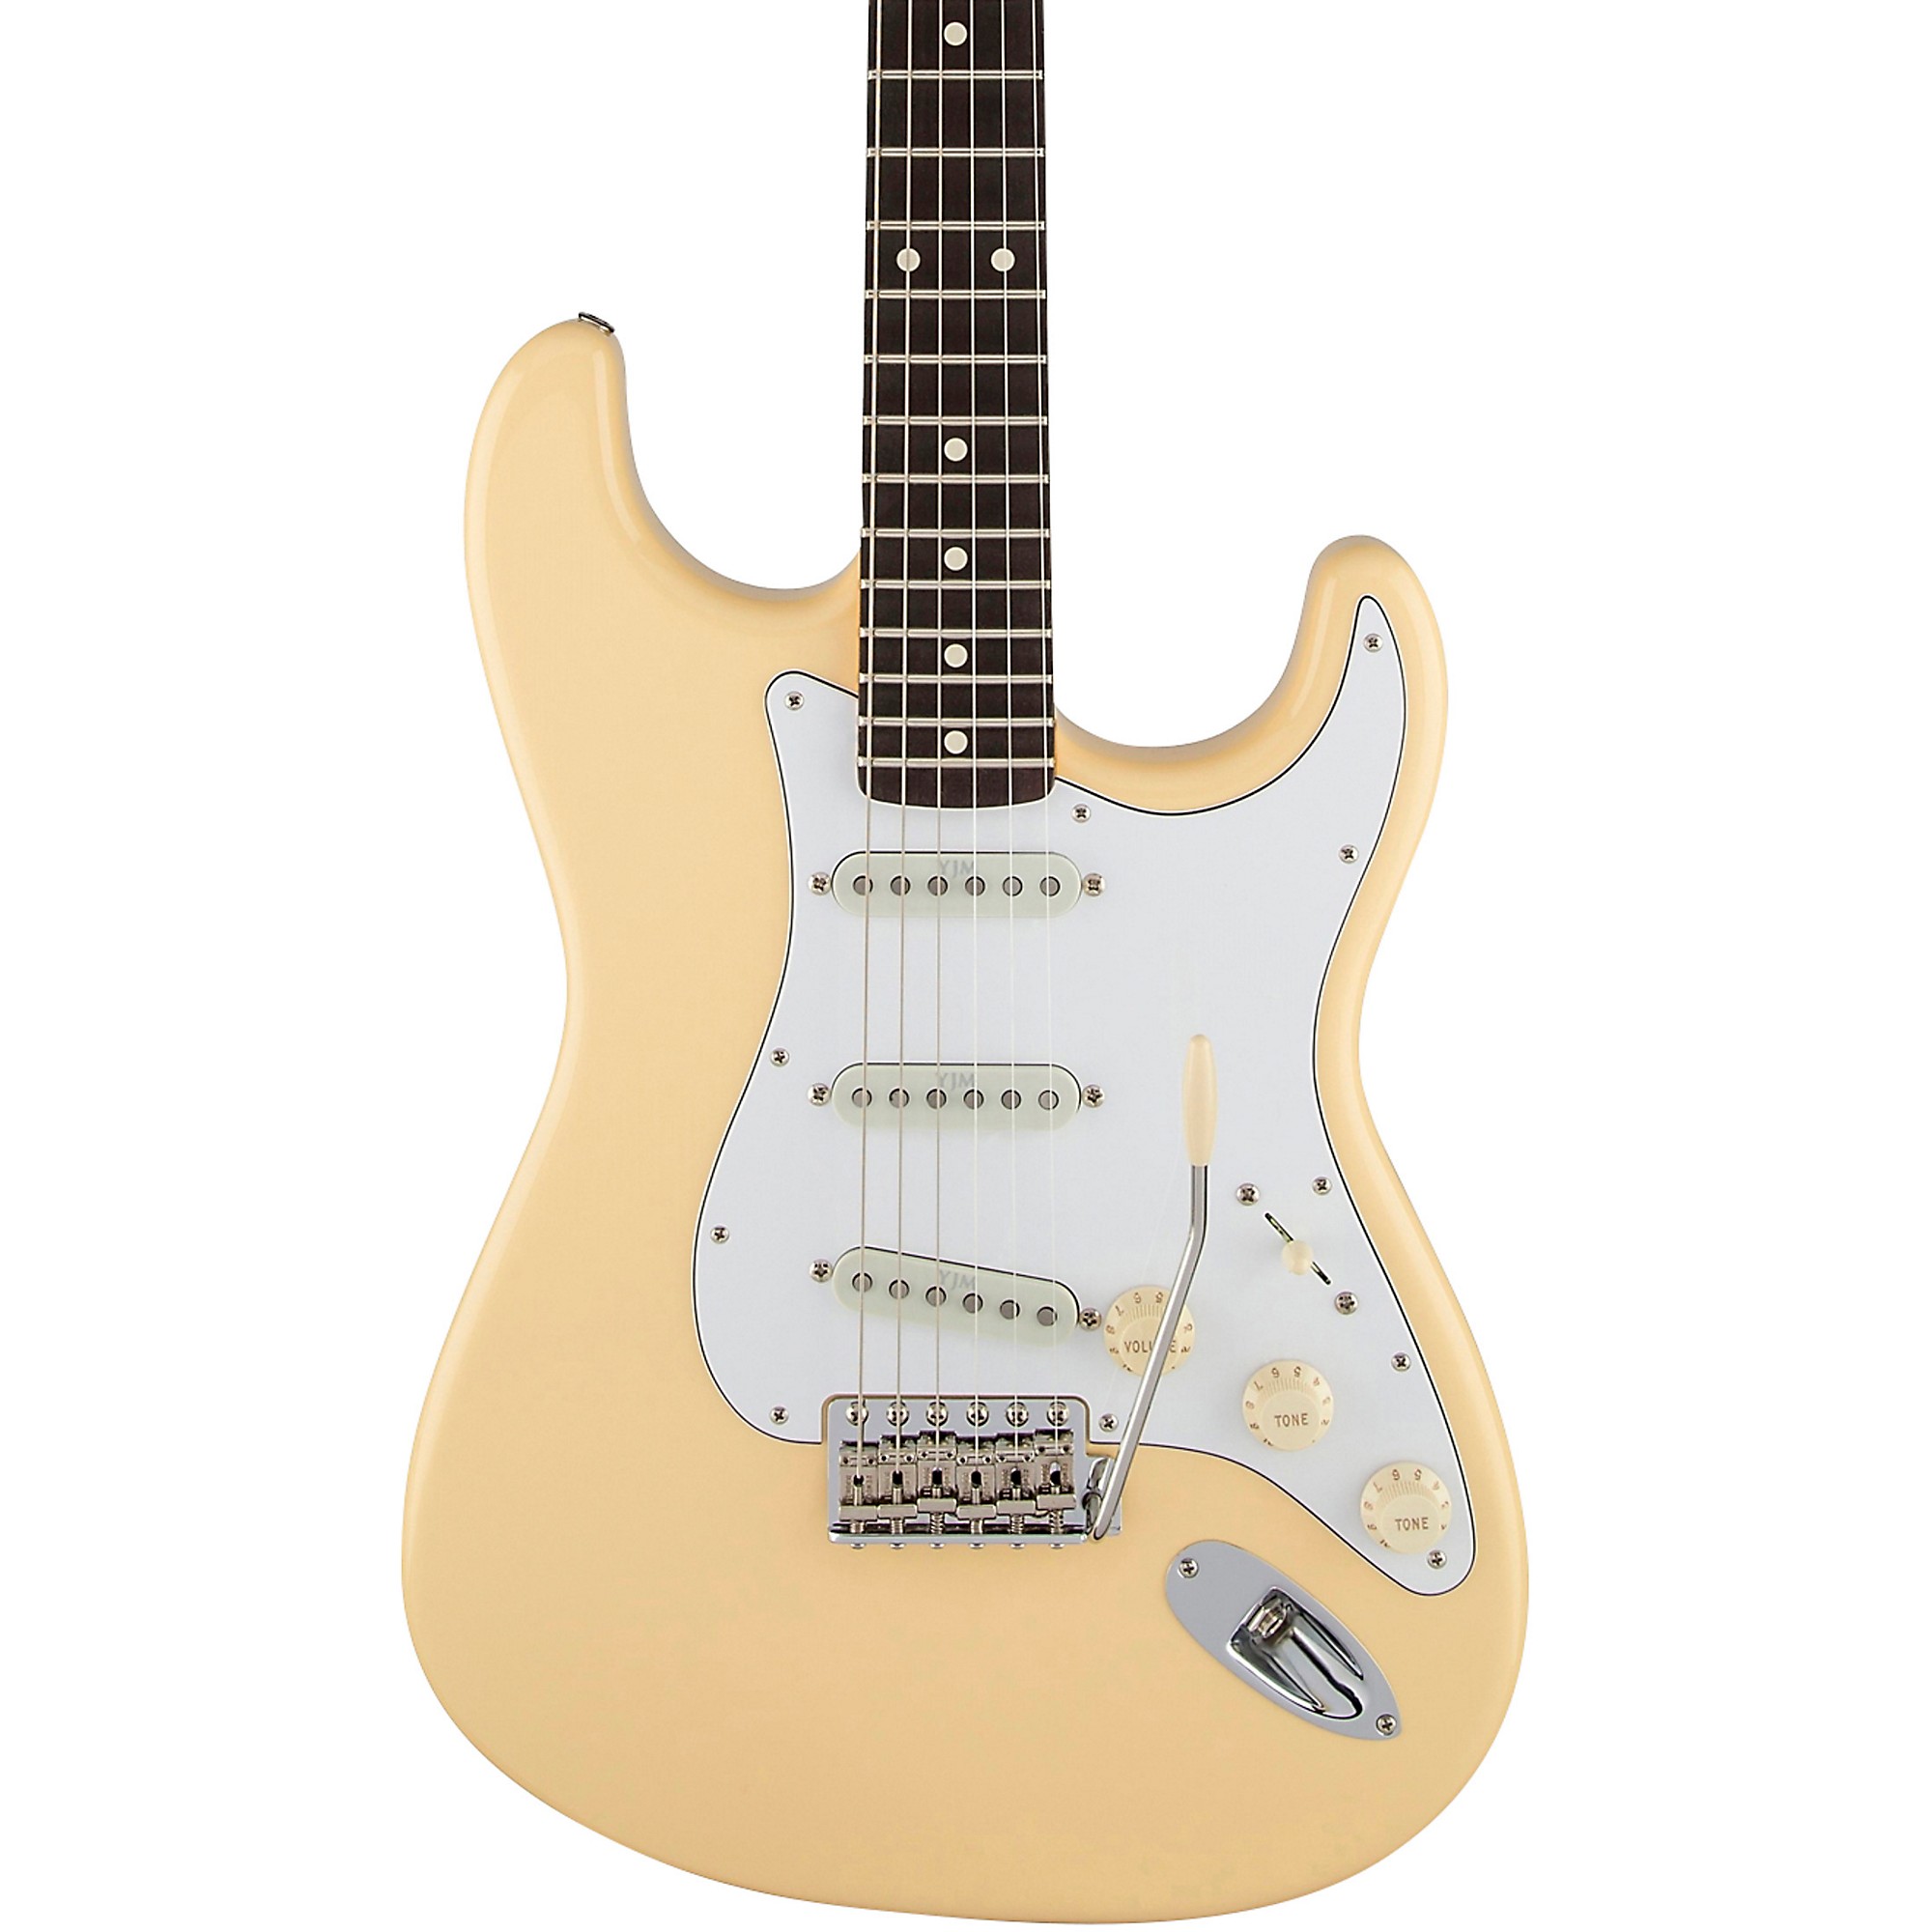 Fender Artist Series Yngwie Malmsteen Stratocaster Электрогитара Винтаж Белый Палисандр malmsteen yngwie виниловая пластинка malmsteen yngwie parabellum